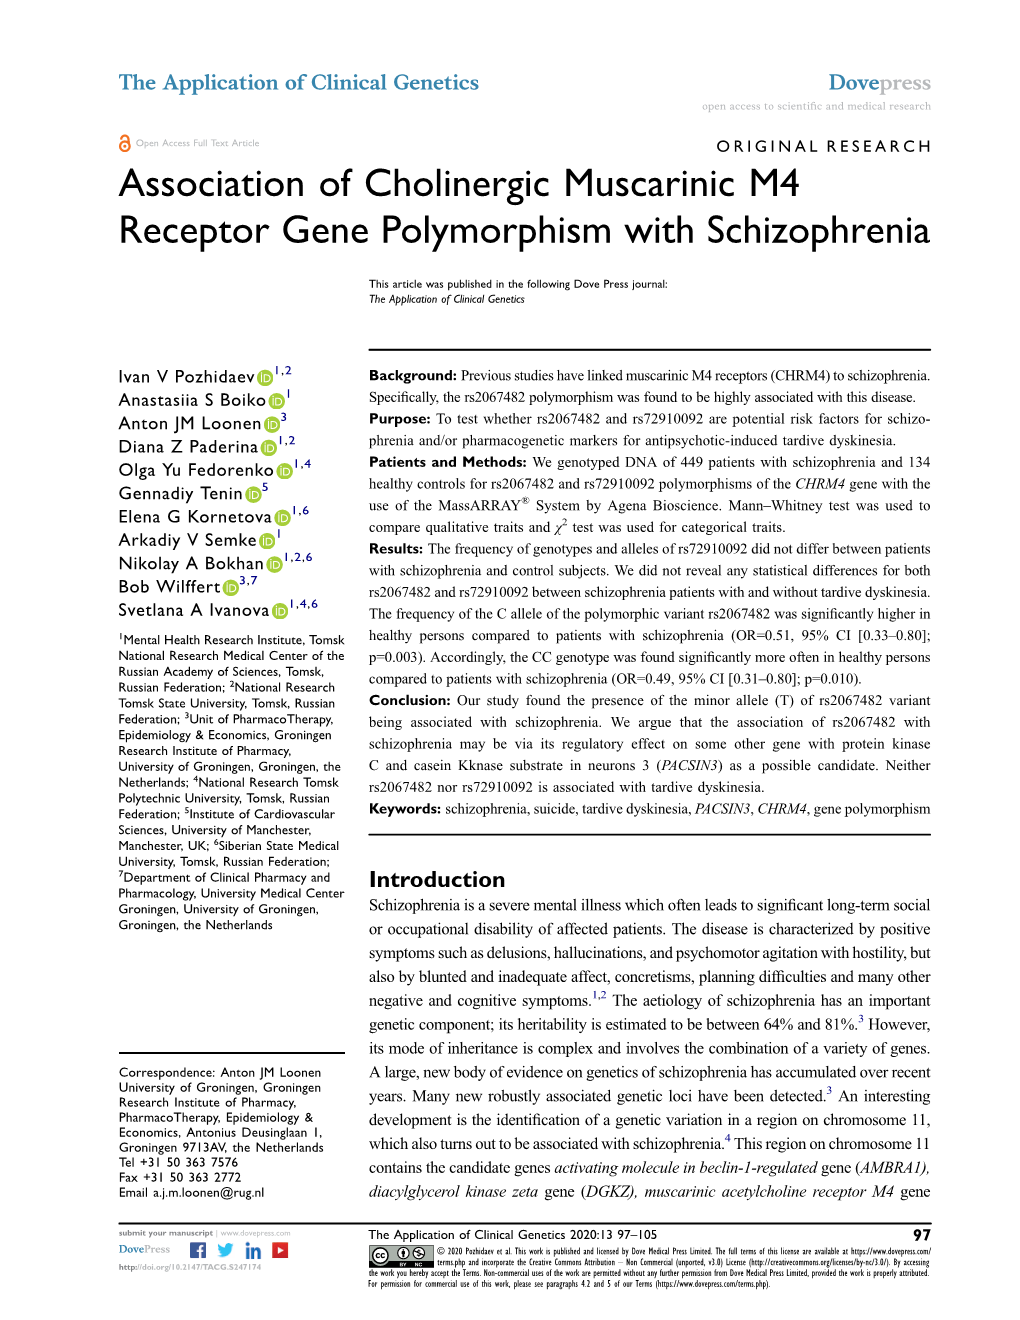 Association of Cholinergic Muscarinic M4 Receptor Gene Polymorphism with Schizophrenia